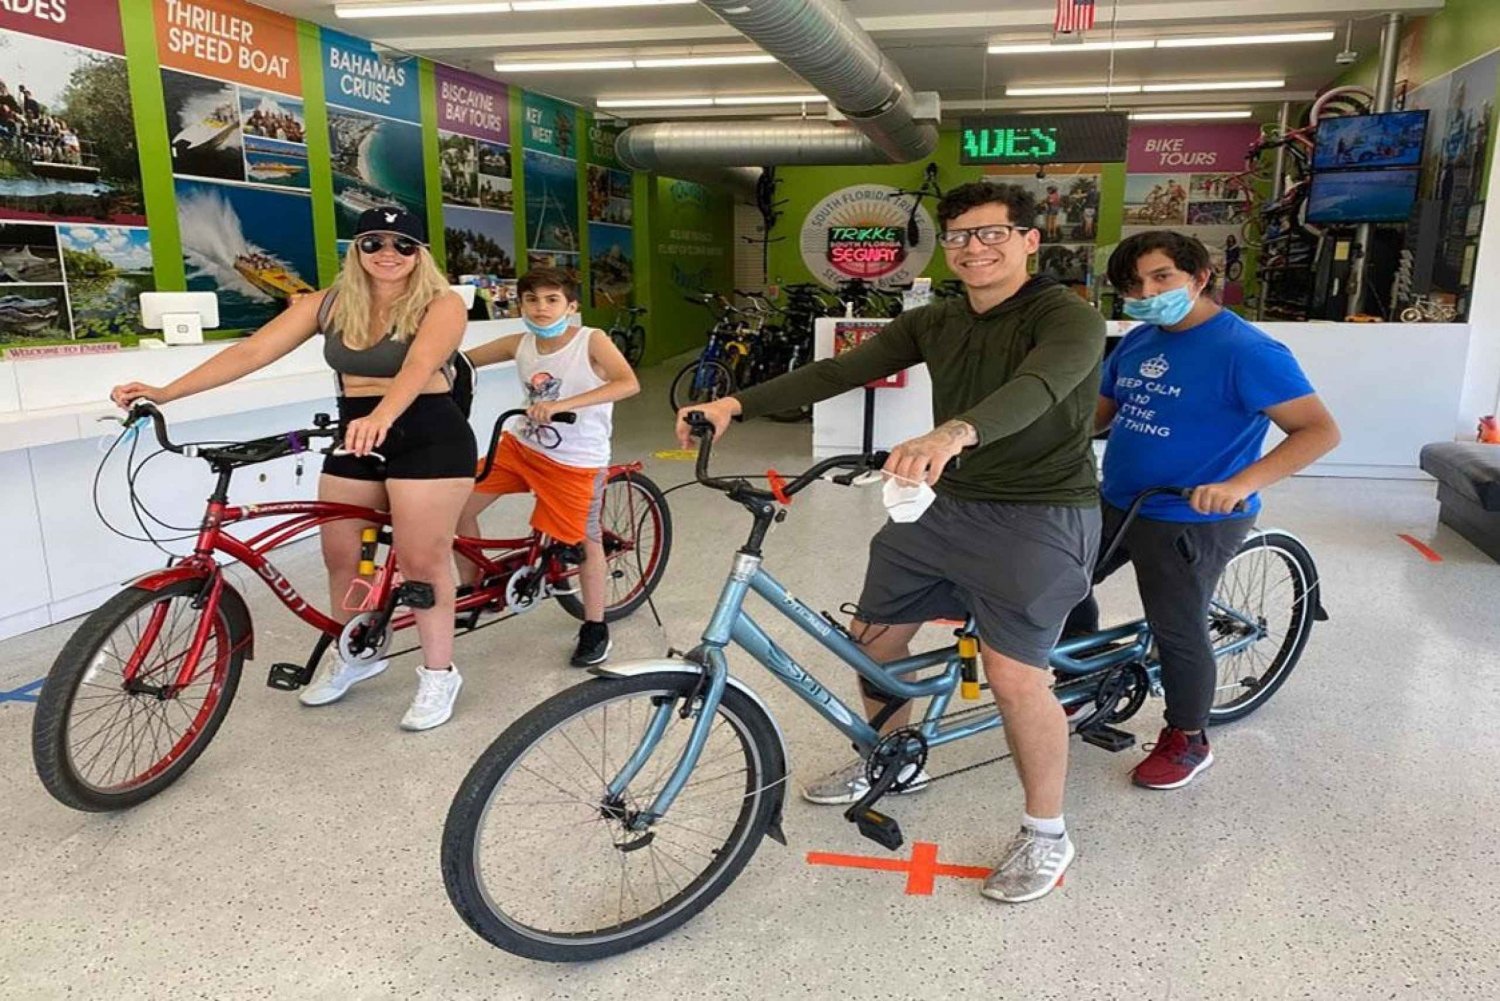 Miami: South Beach Tandem Bike Rental